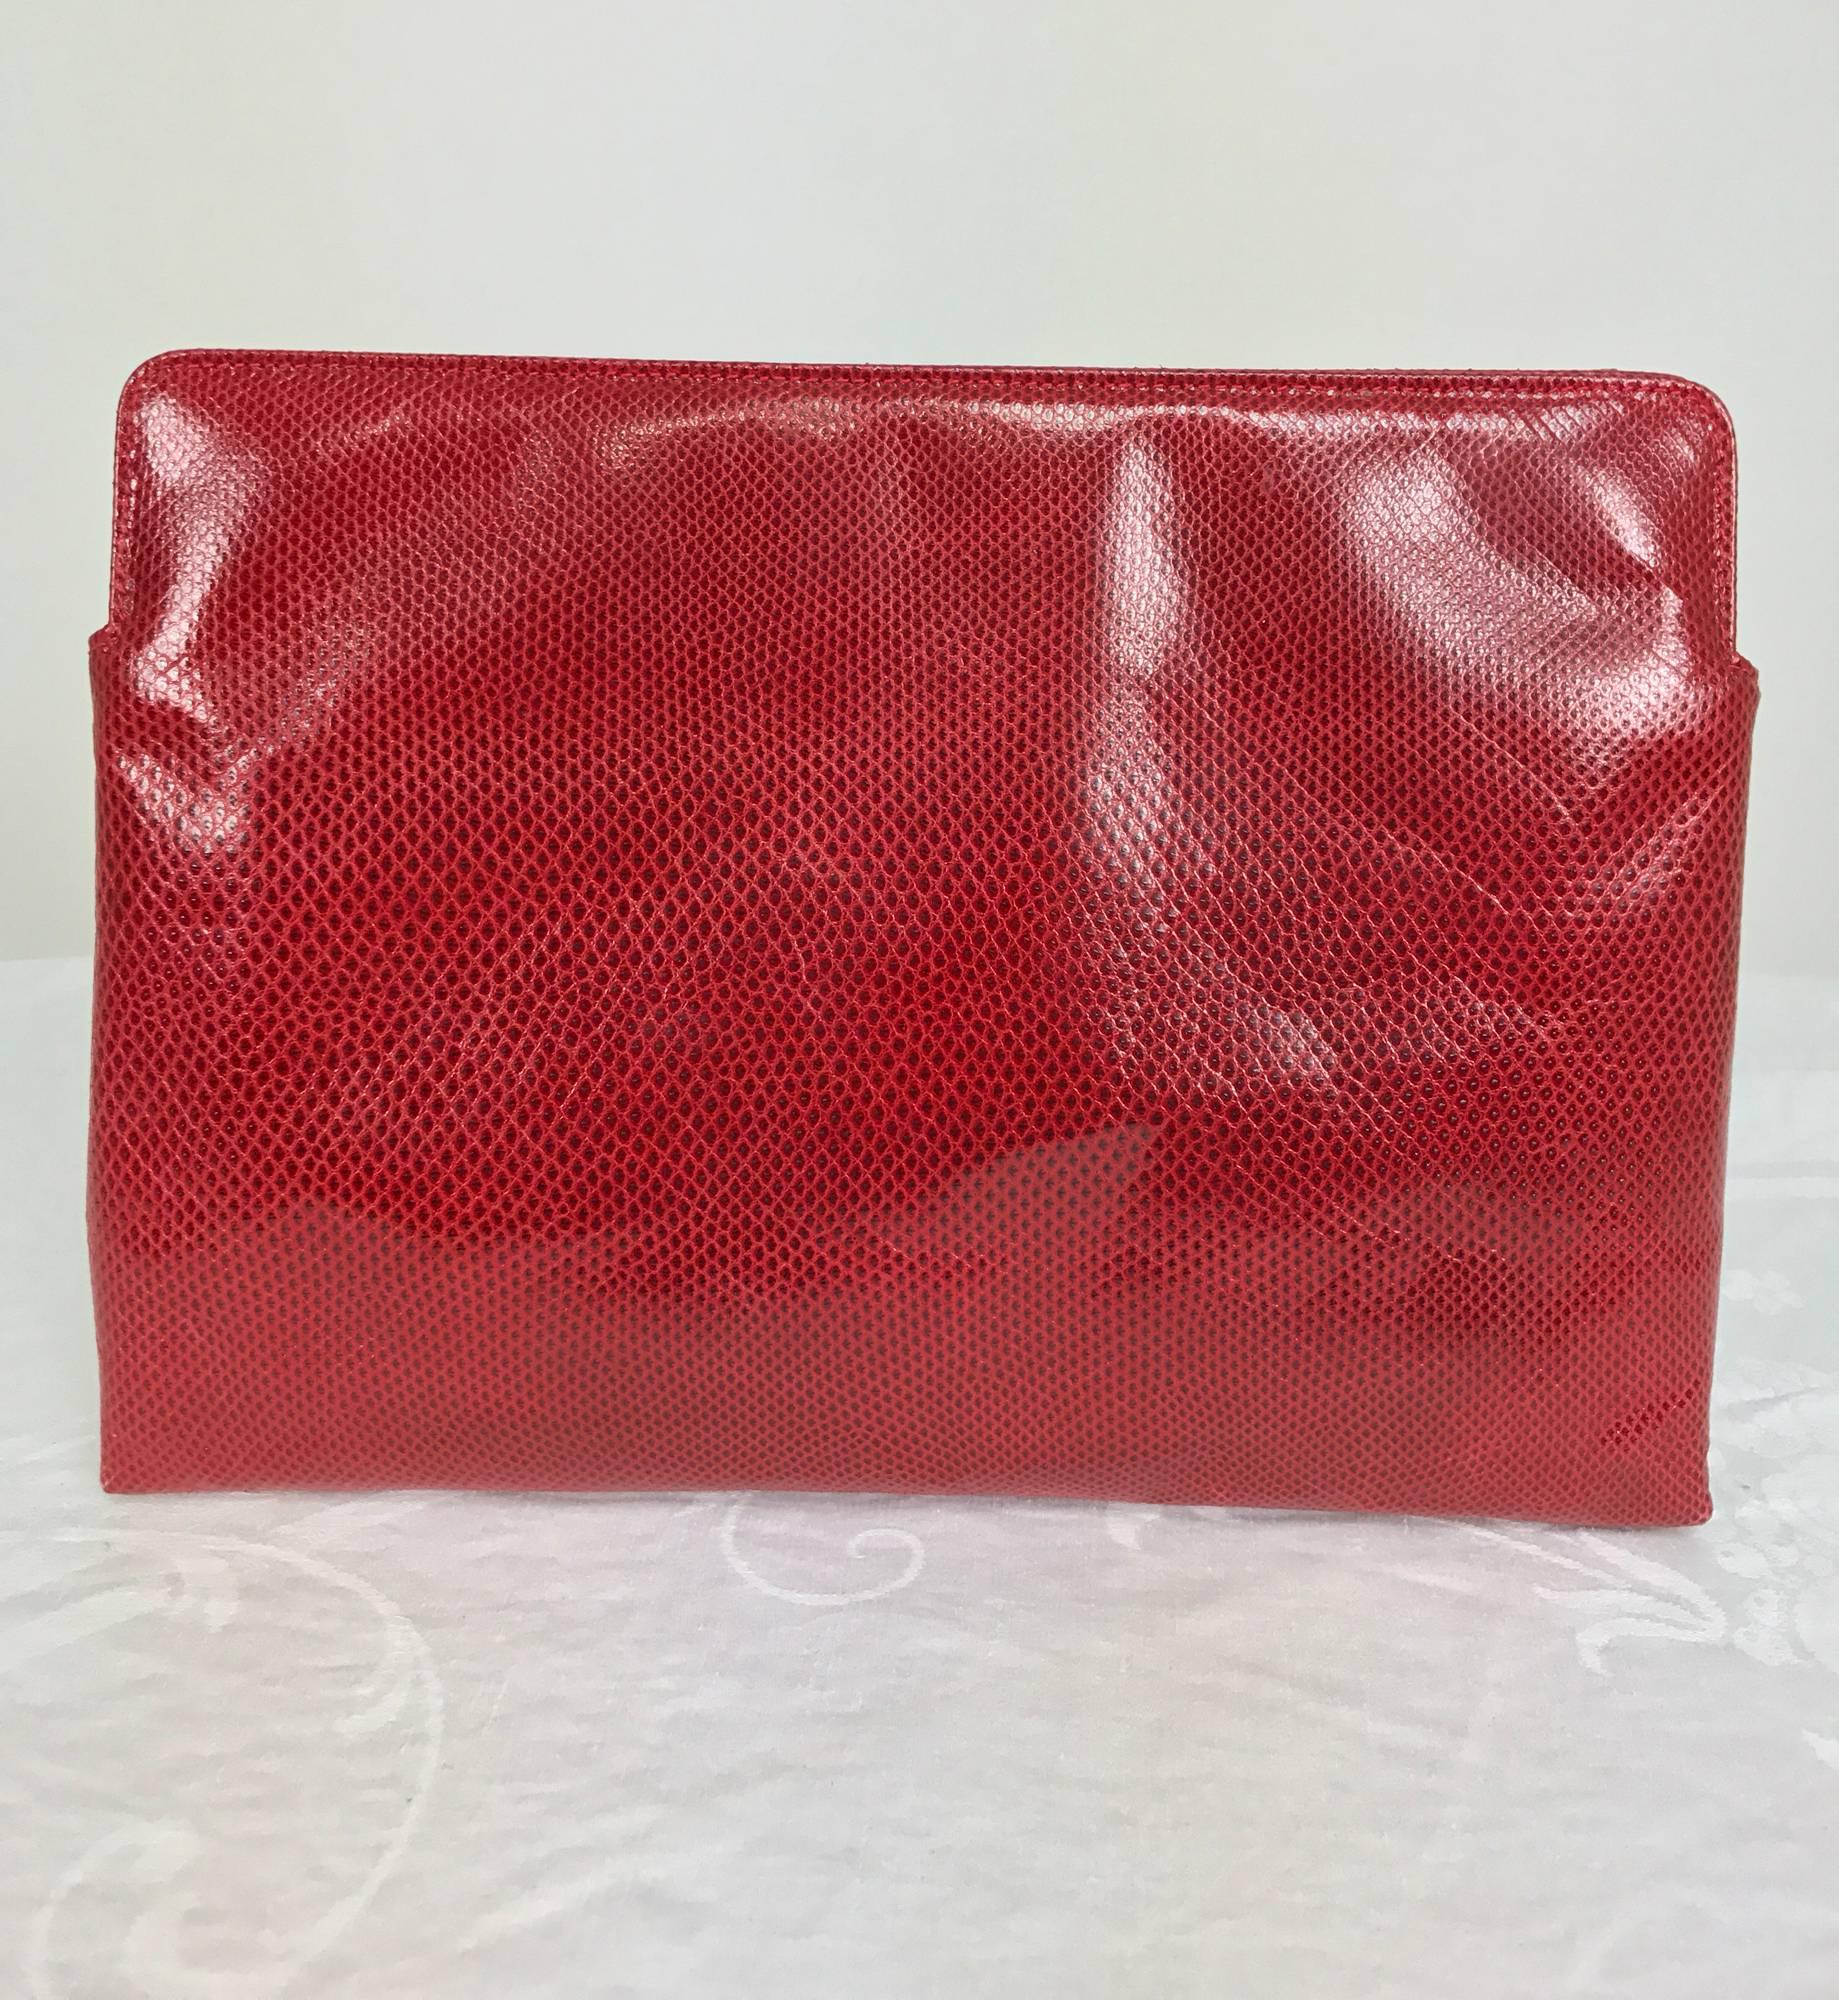 Red Vintage Ferragamo red lizard clutch cross body handbag 1980s